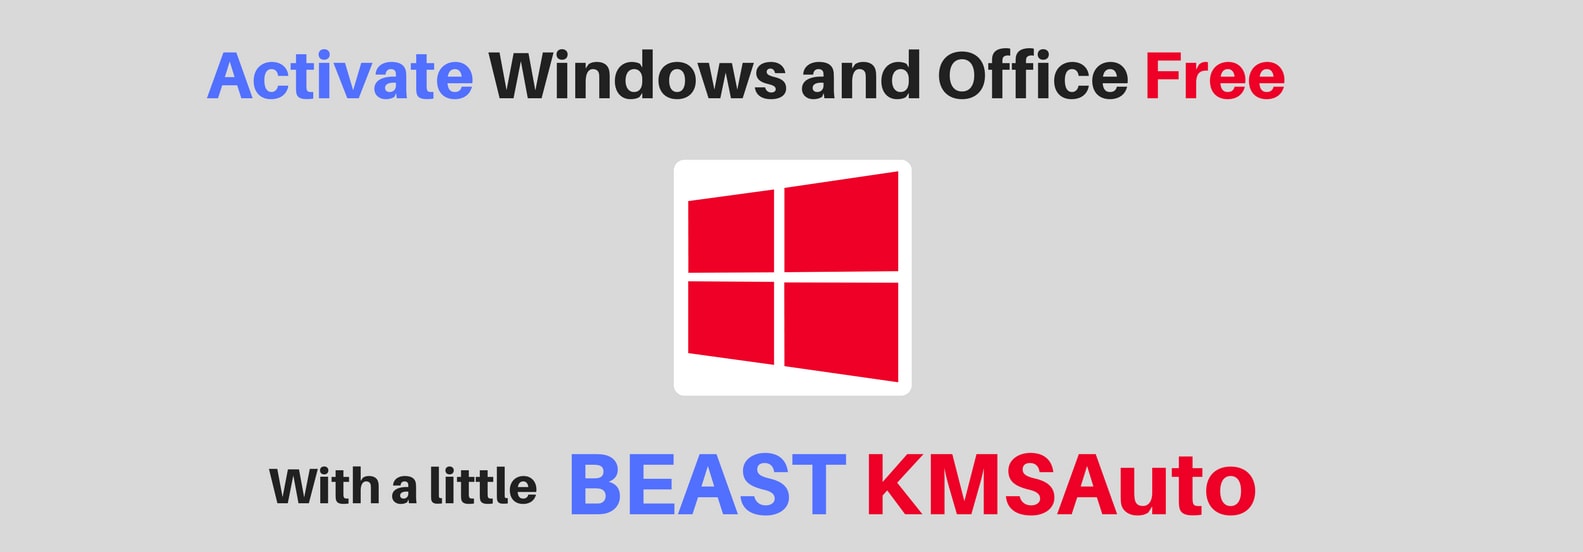 Windows 10 Pro Activator KMS (32-bit 64-bit)Windows 10 Pro Activator KMS (32-bit 64-bit) slider1